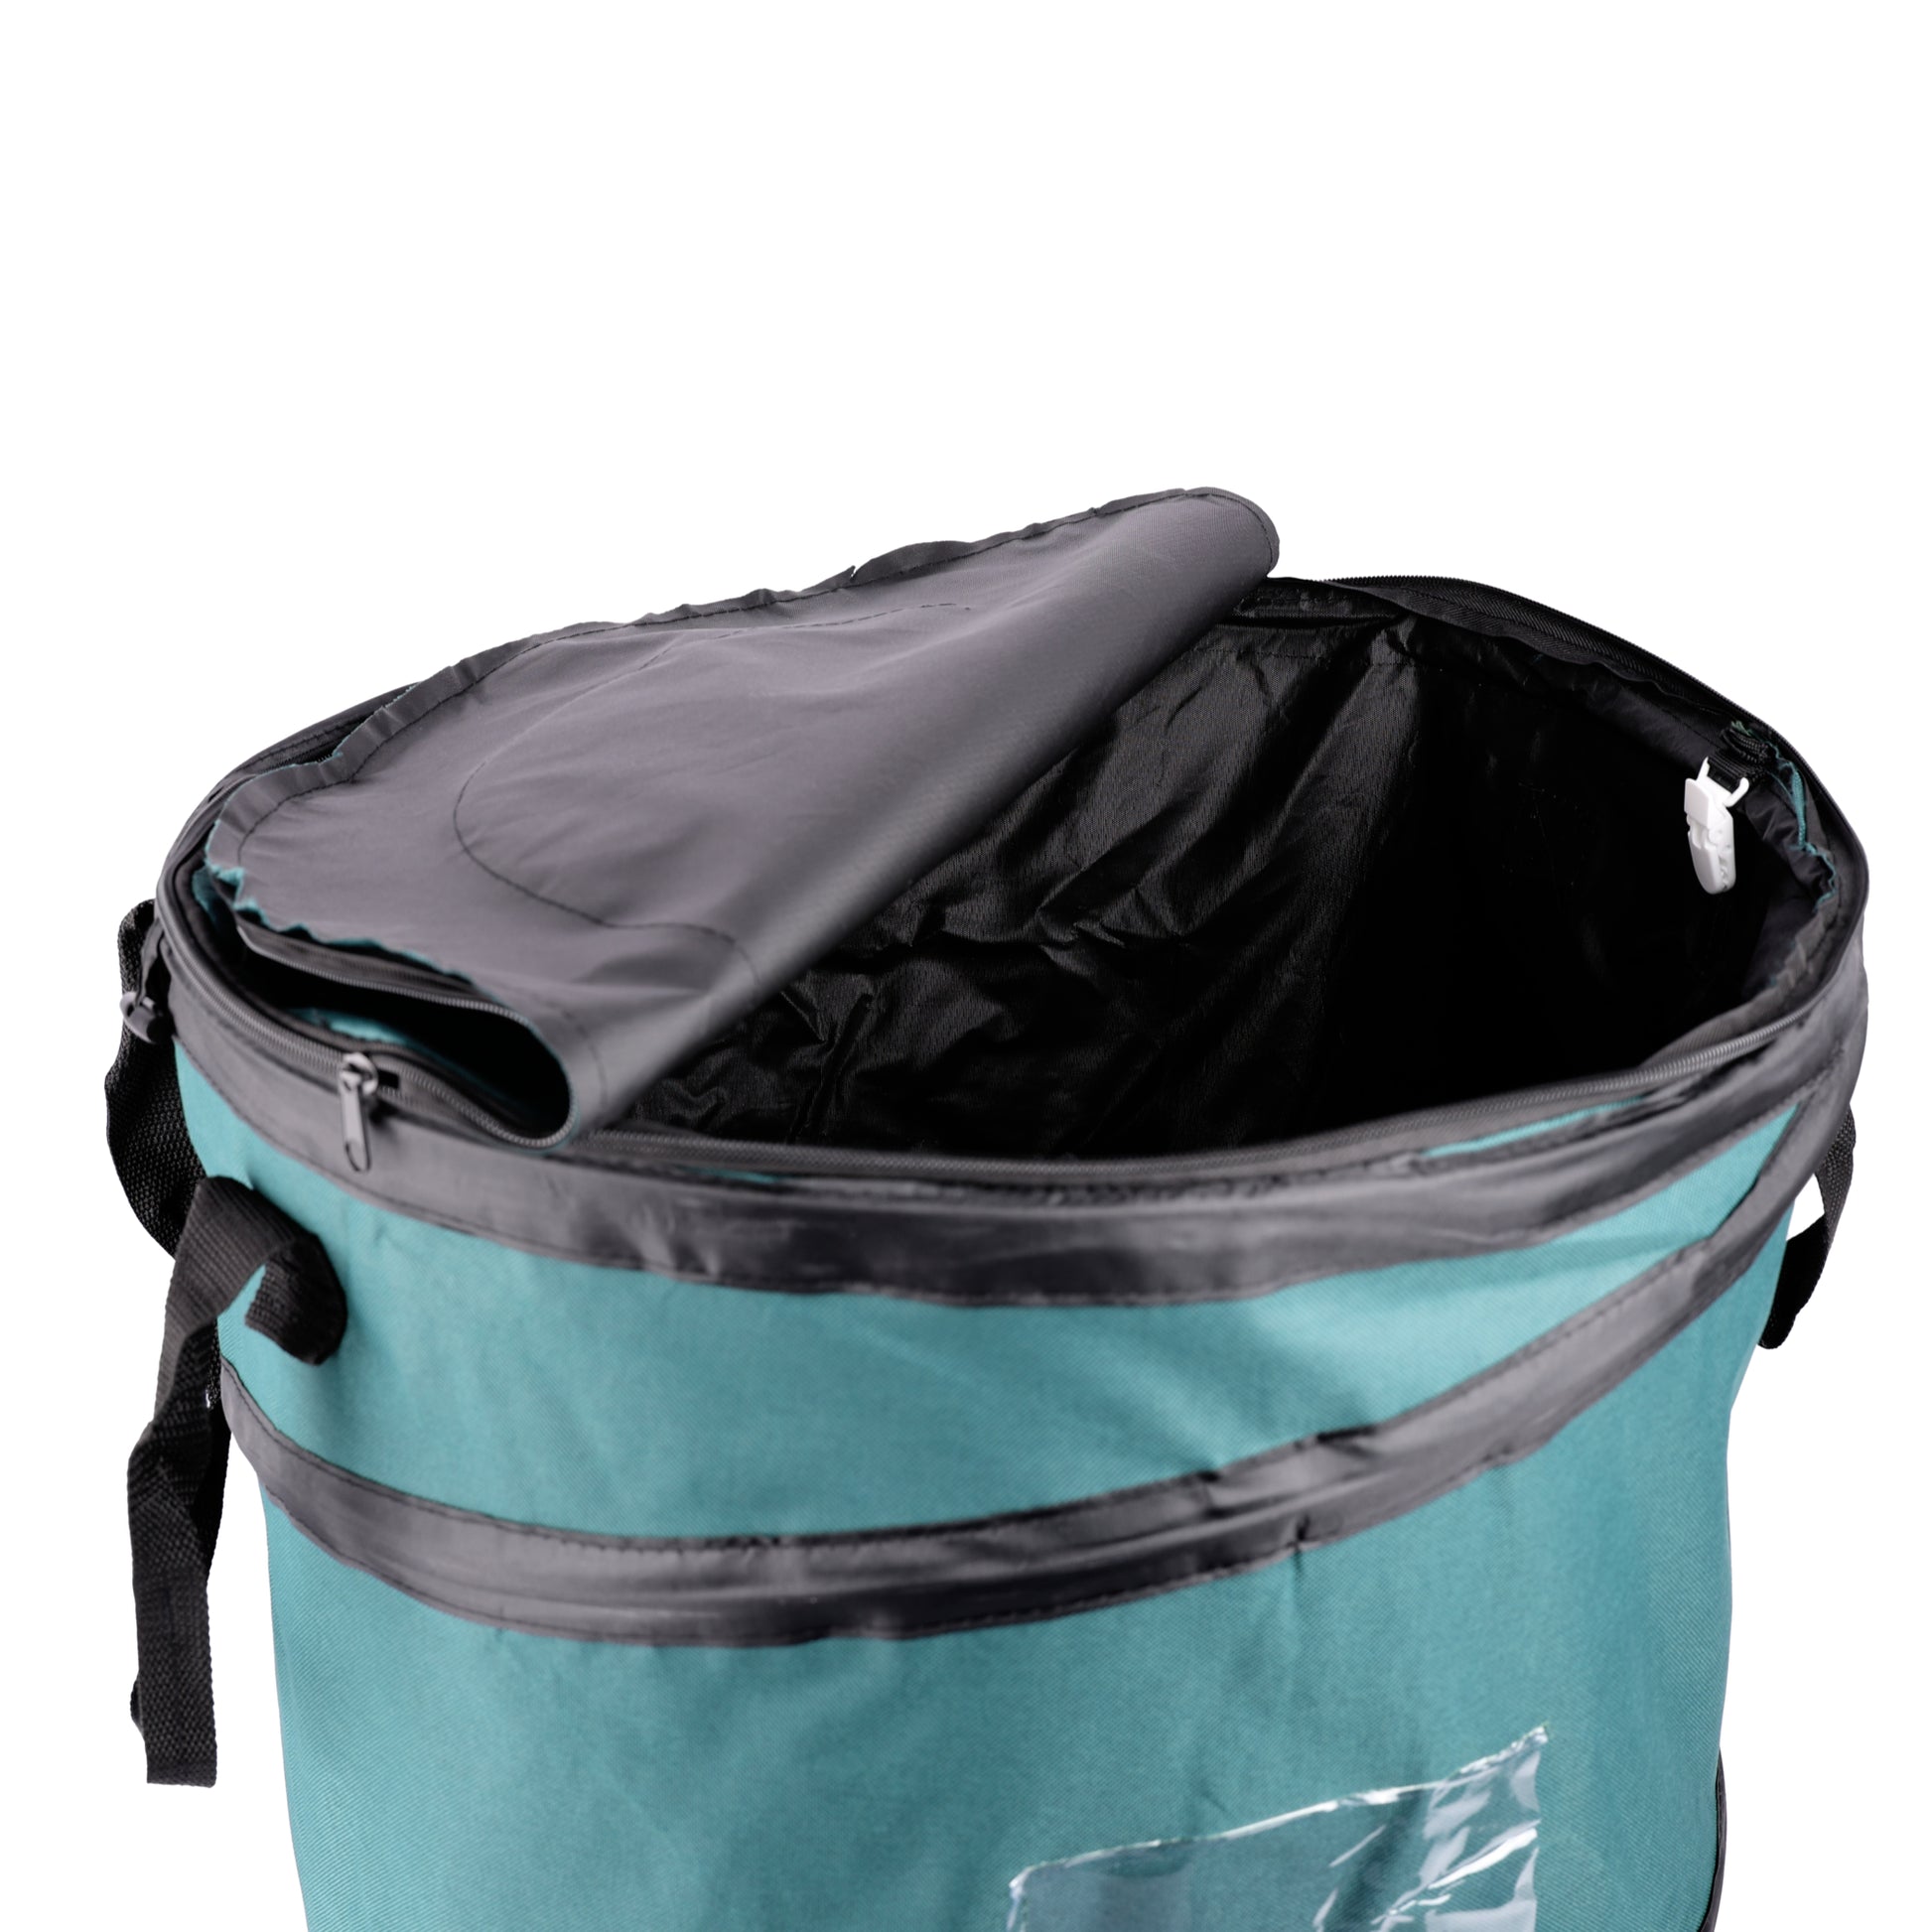 Coghlan's 1219 Pop-Up Camp Trash Can, 33 Gallon – Toolbox Supply